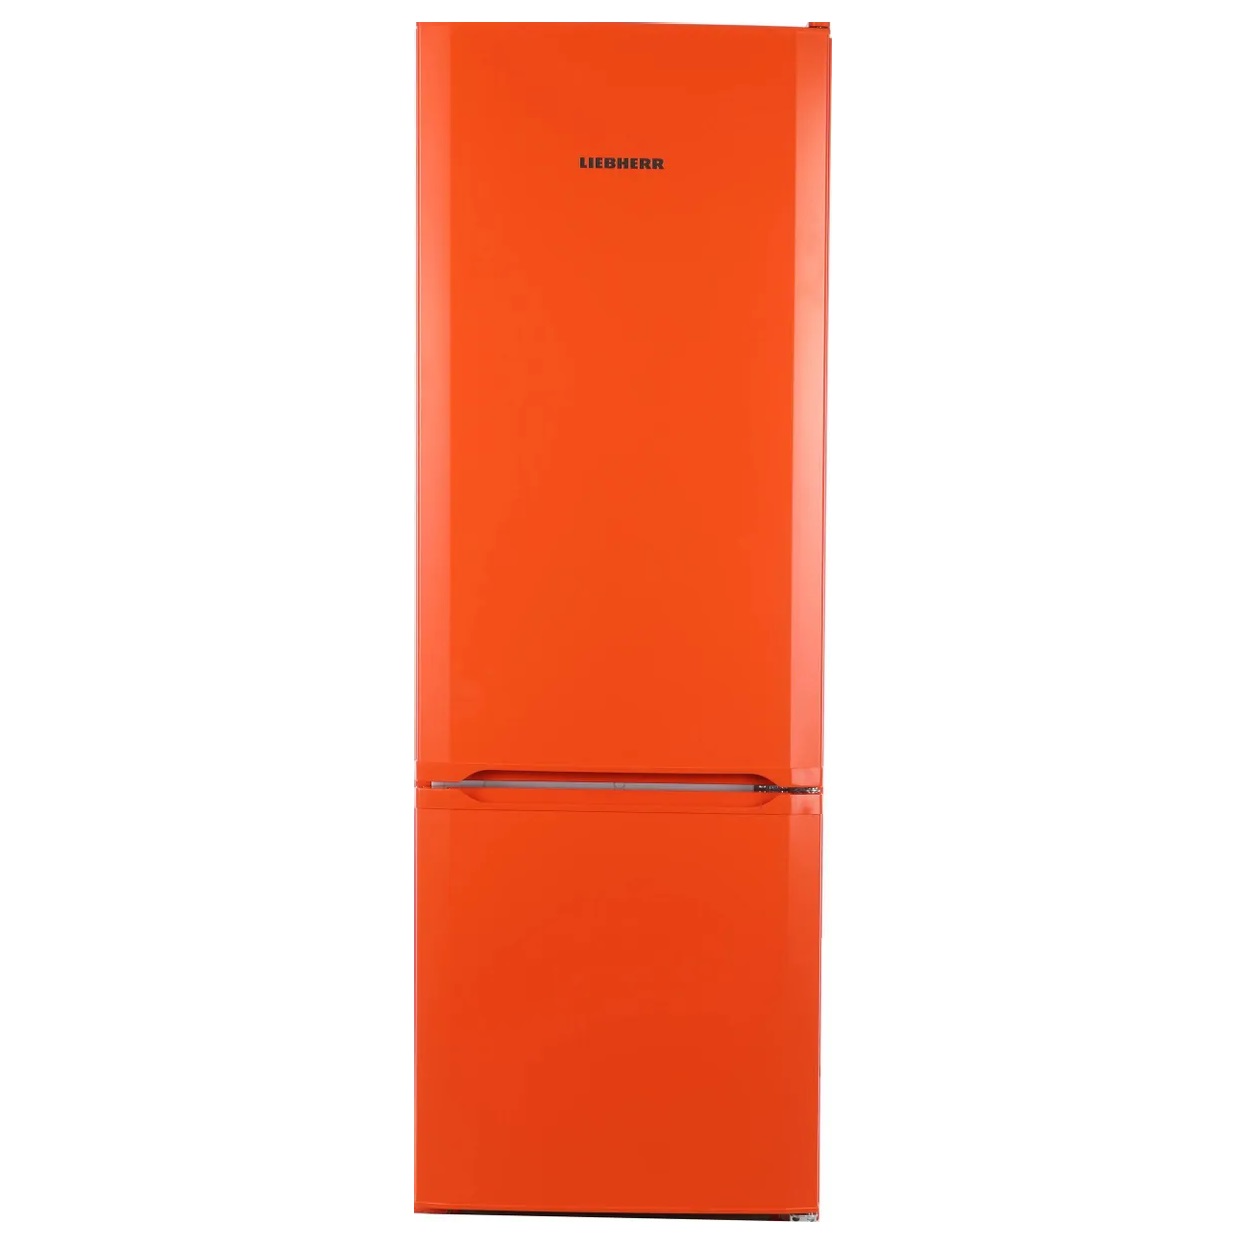 Холодильник LIEBHERR CUNO 2831-22 001 оранжевый двухкамерный холодильник liebherr cukw 2831 22 001 зеленый